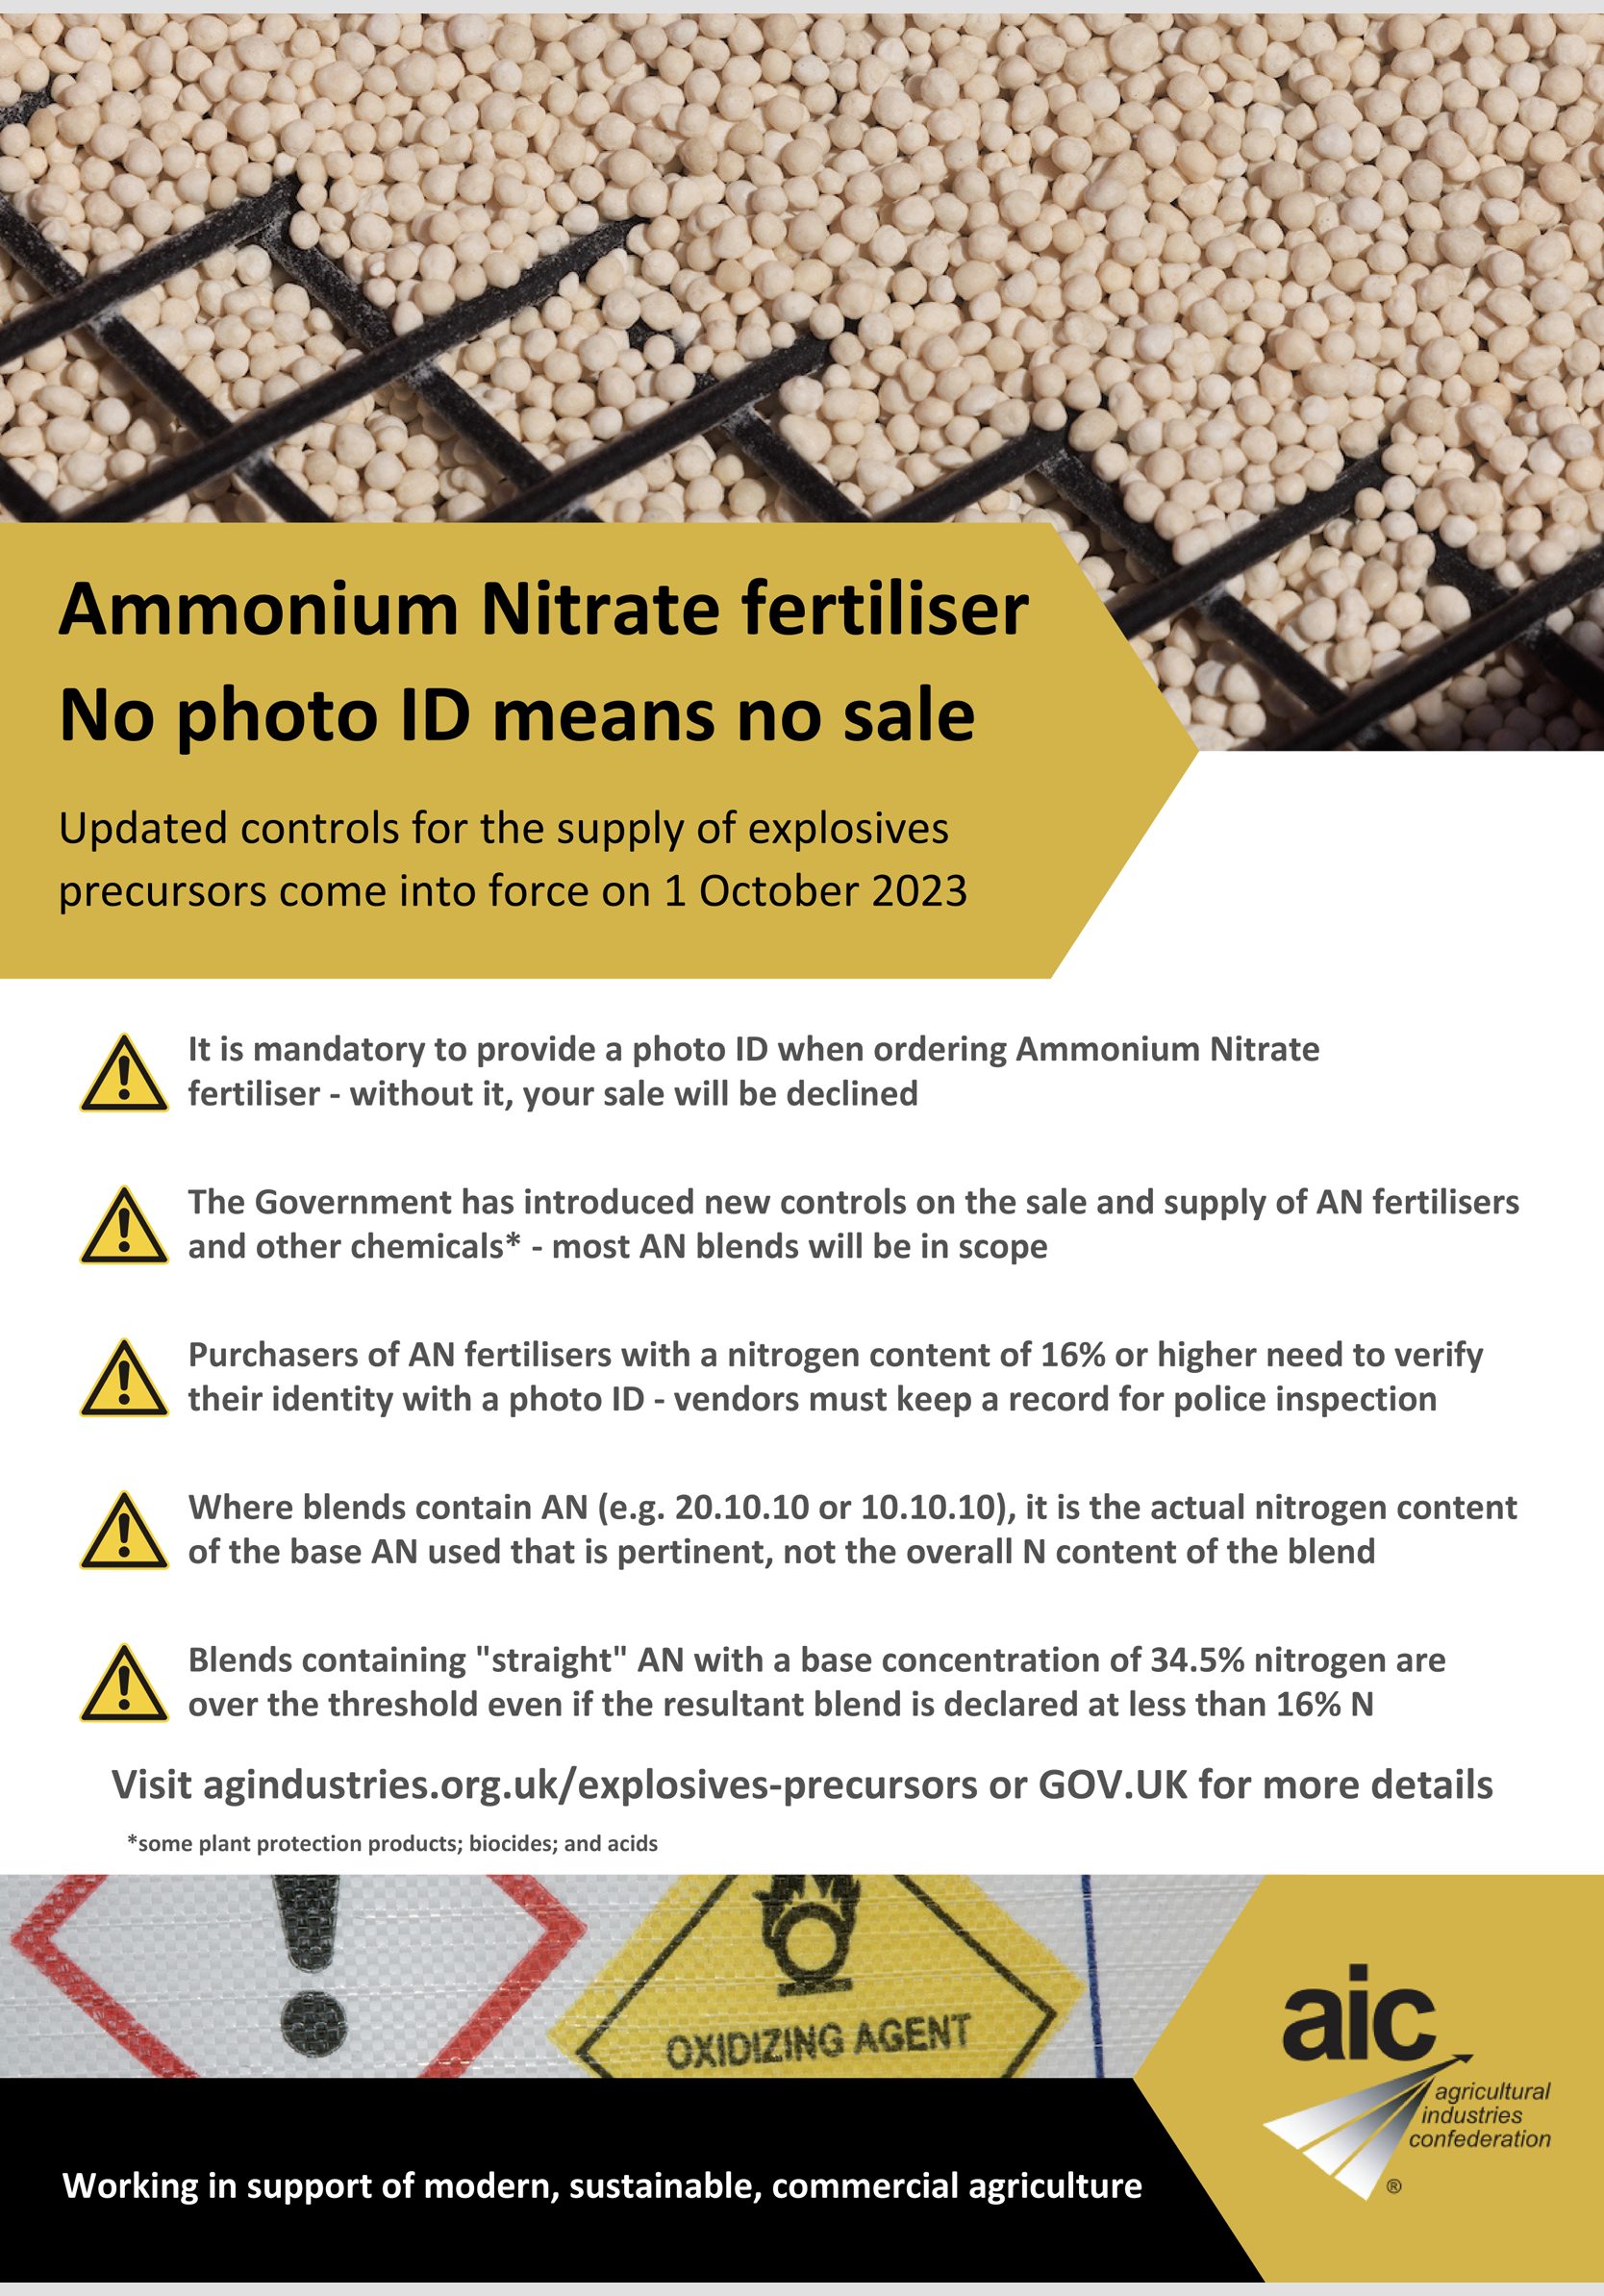 AIC issues guidance on fertiliser photo ID Image